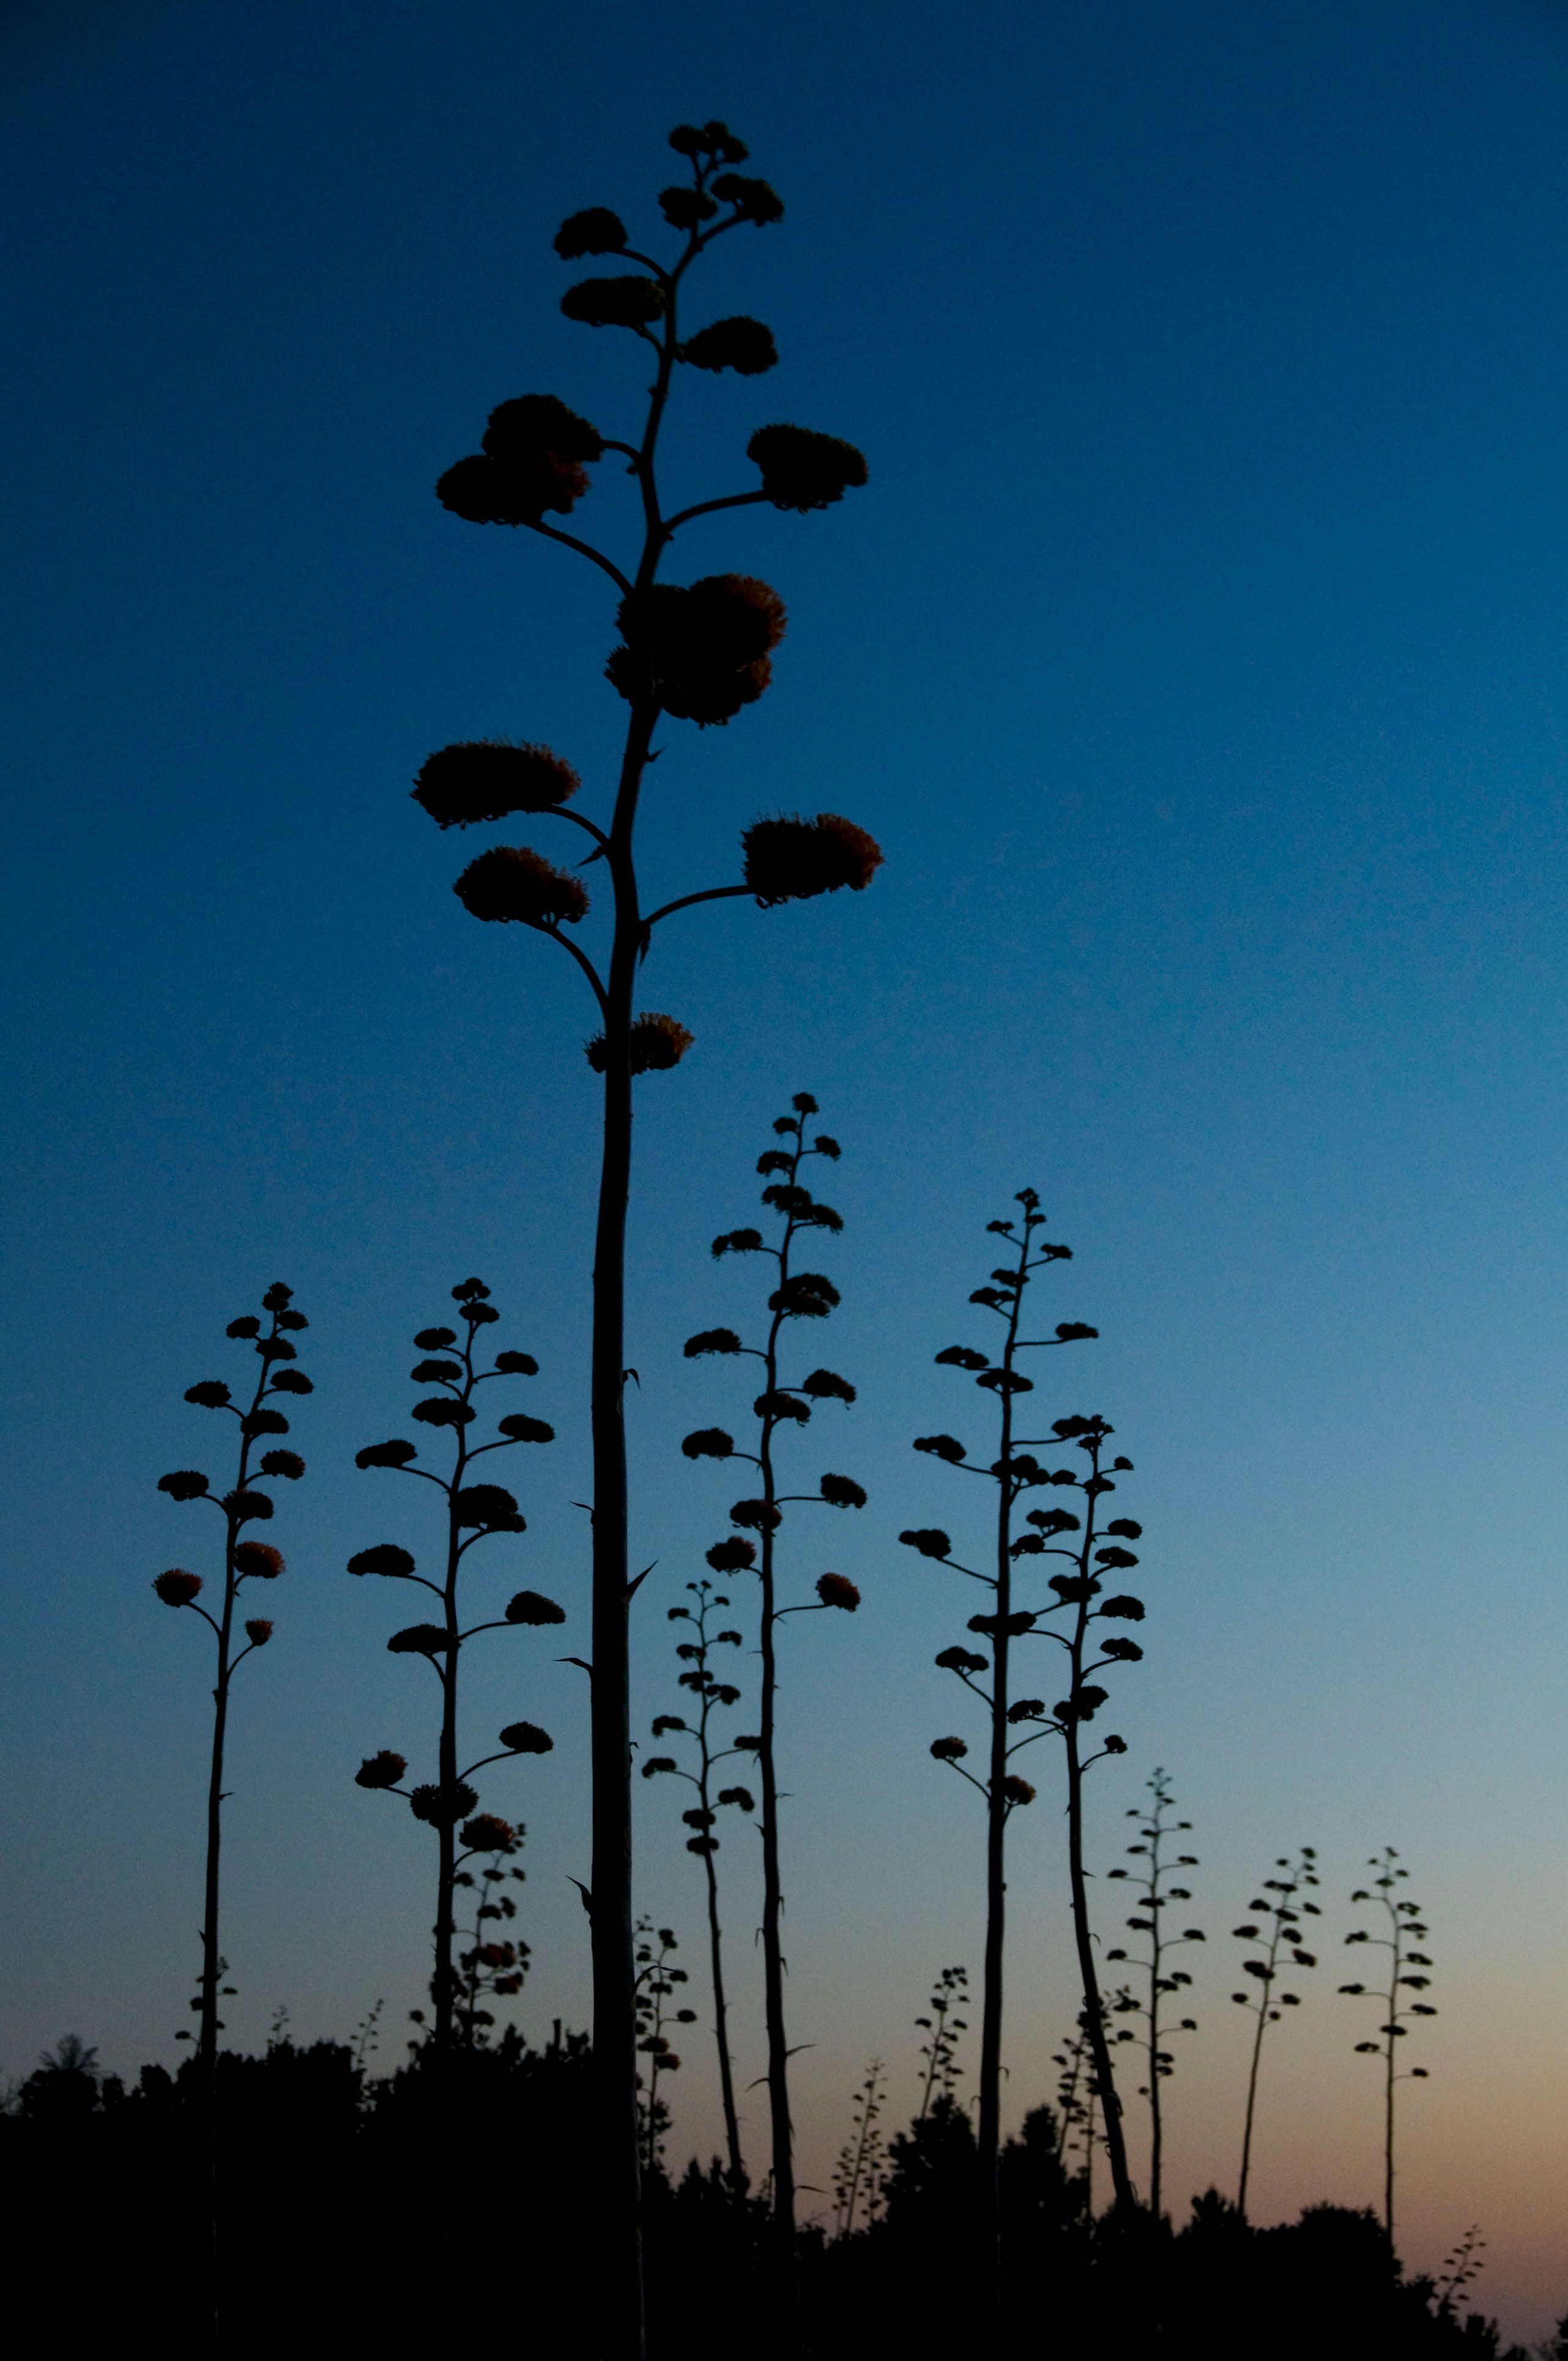 Century plants (Agave chrysantha) on Mt. Ord in the Mazatzal Mts., Arizona